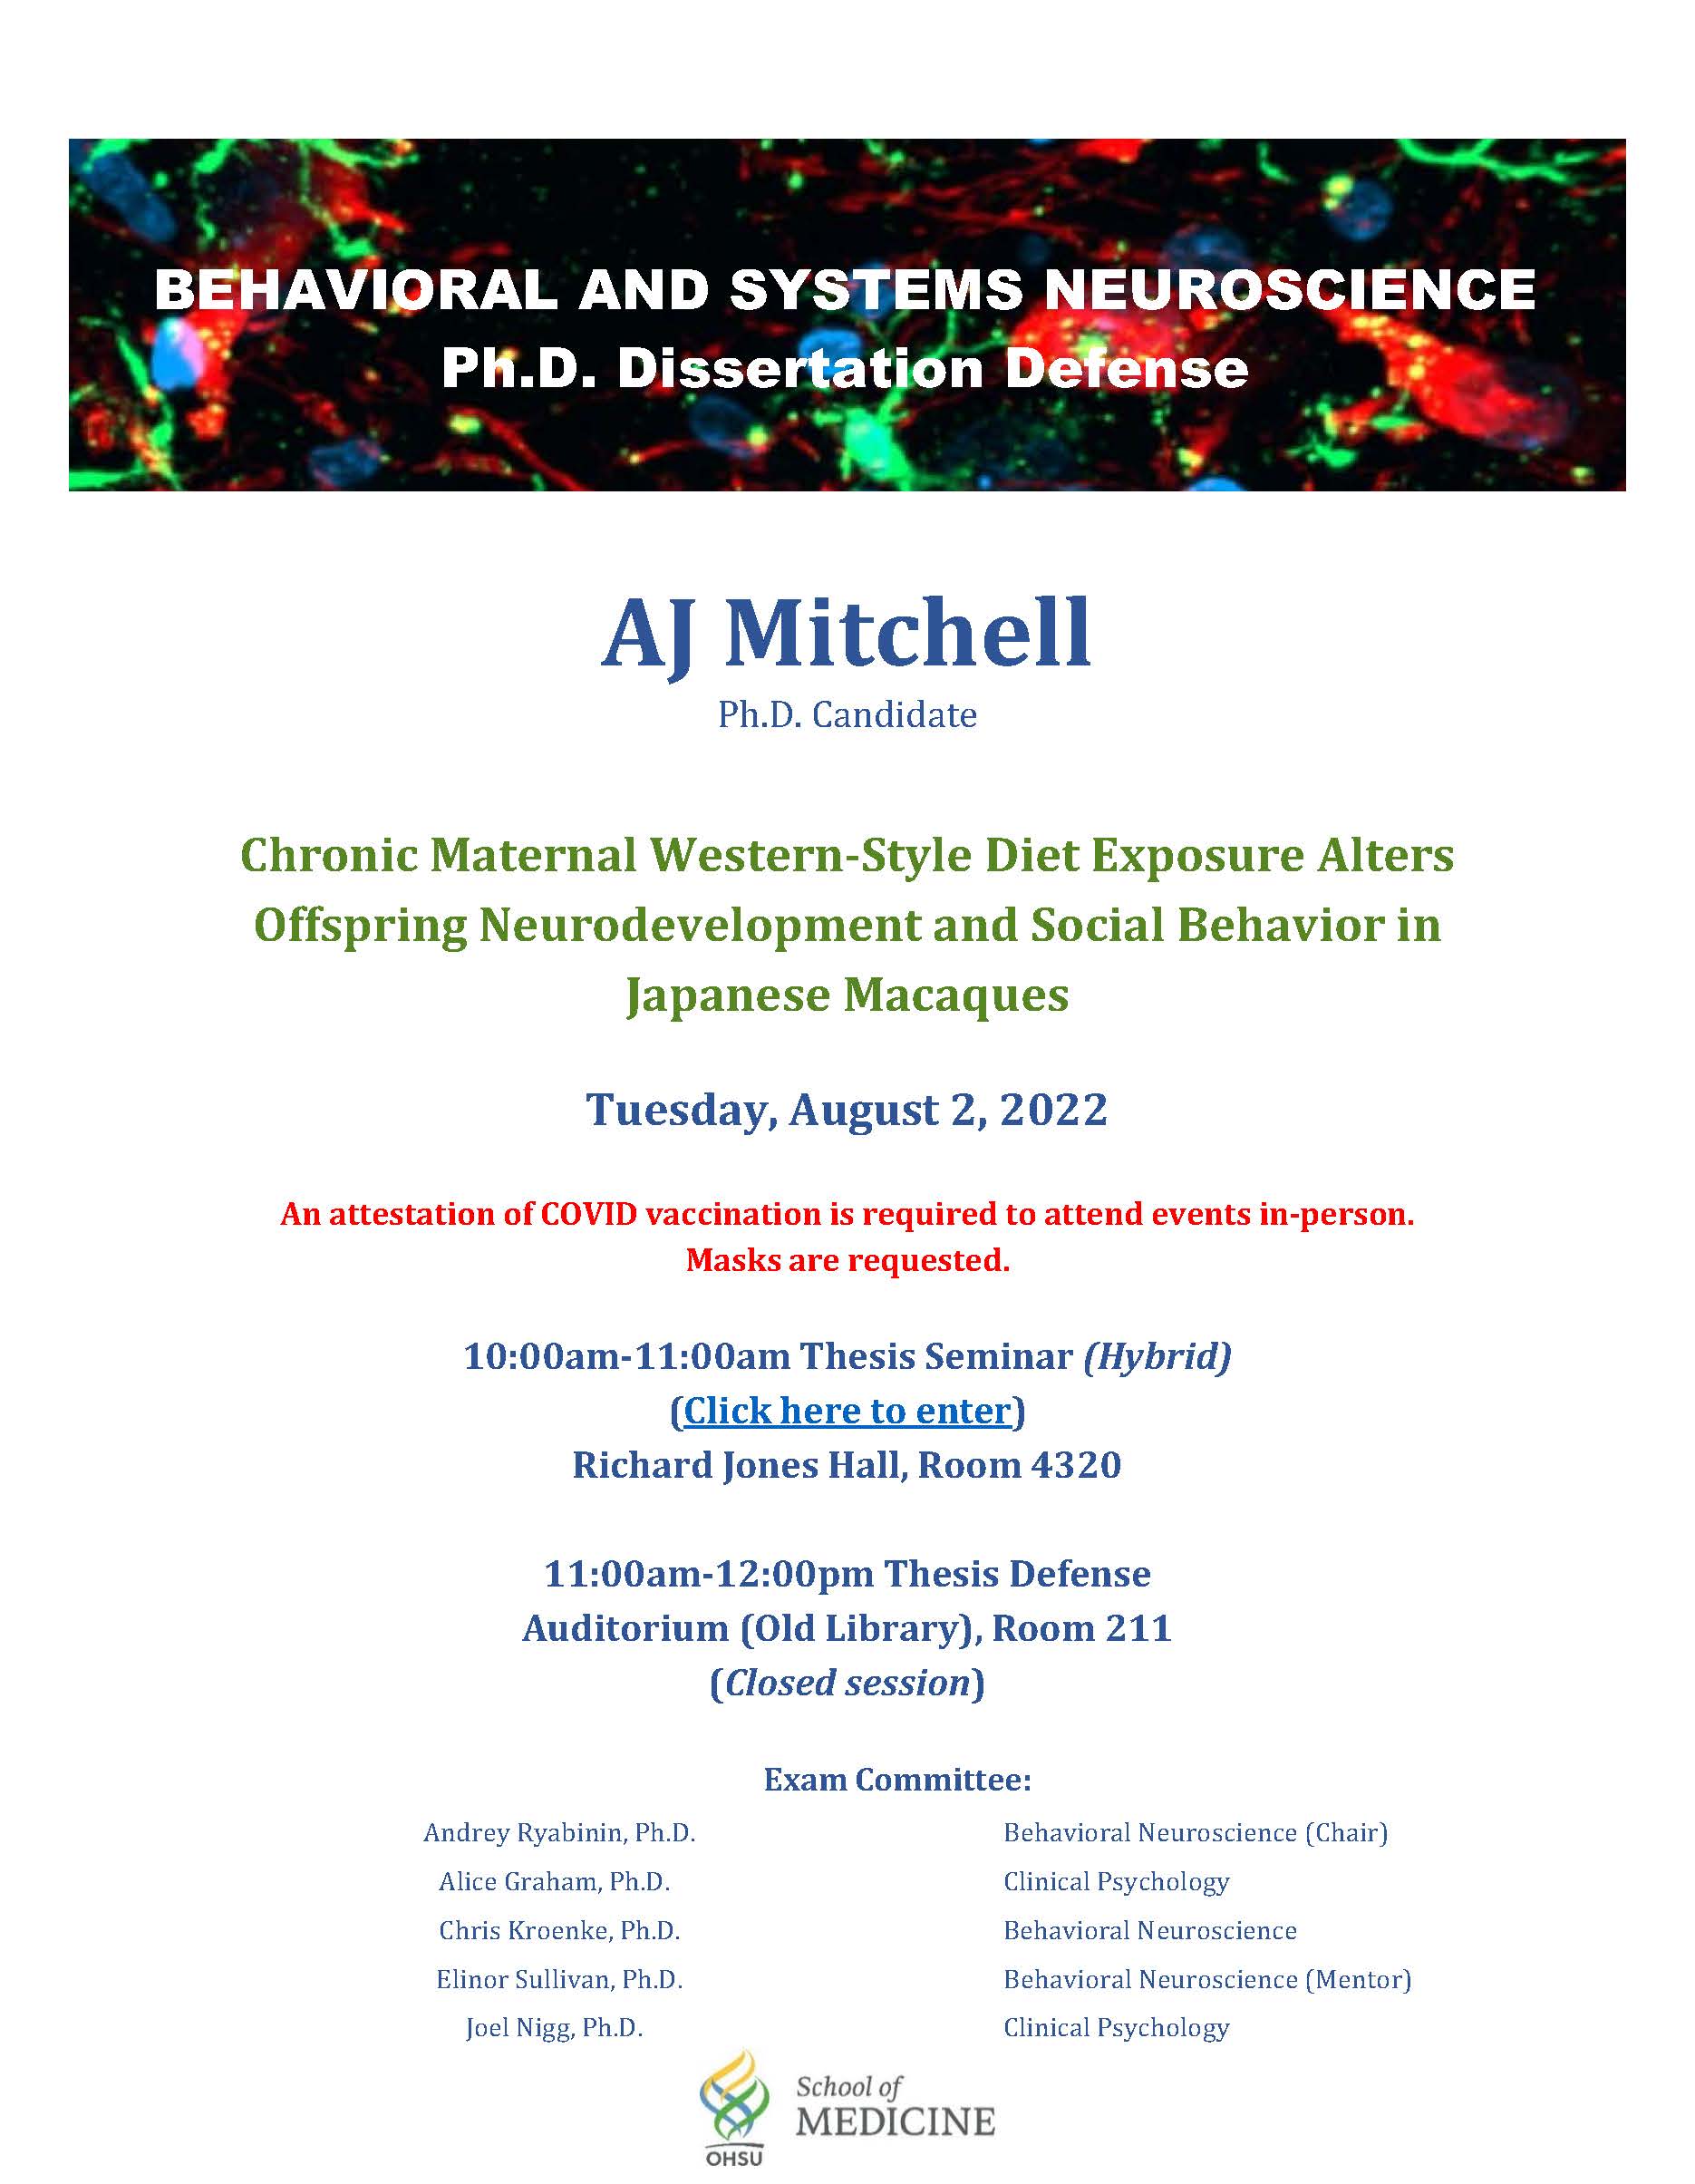 AJ Mitchell Ph.D. Dissertation Defense Flyer